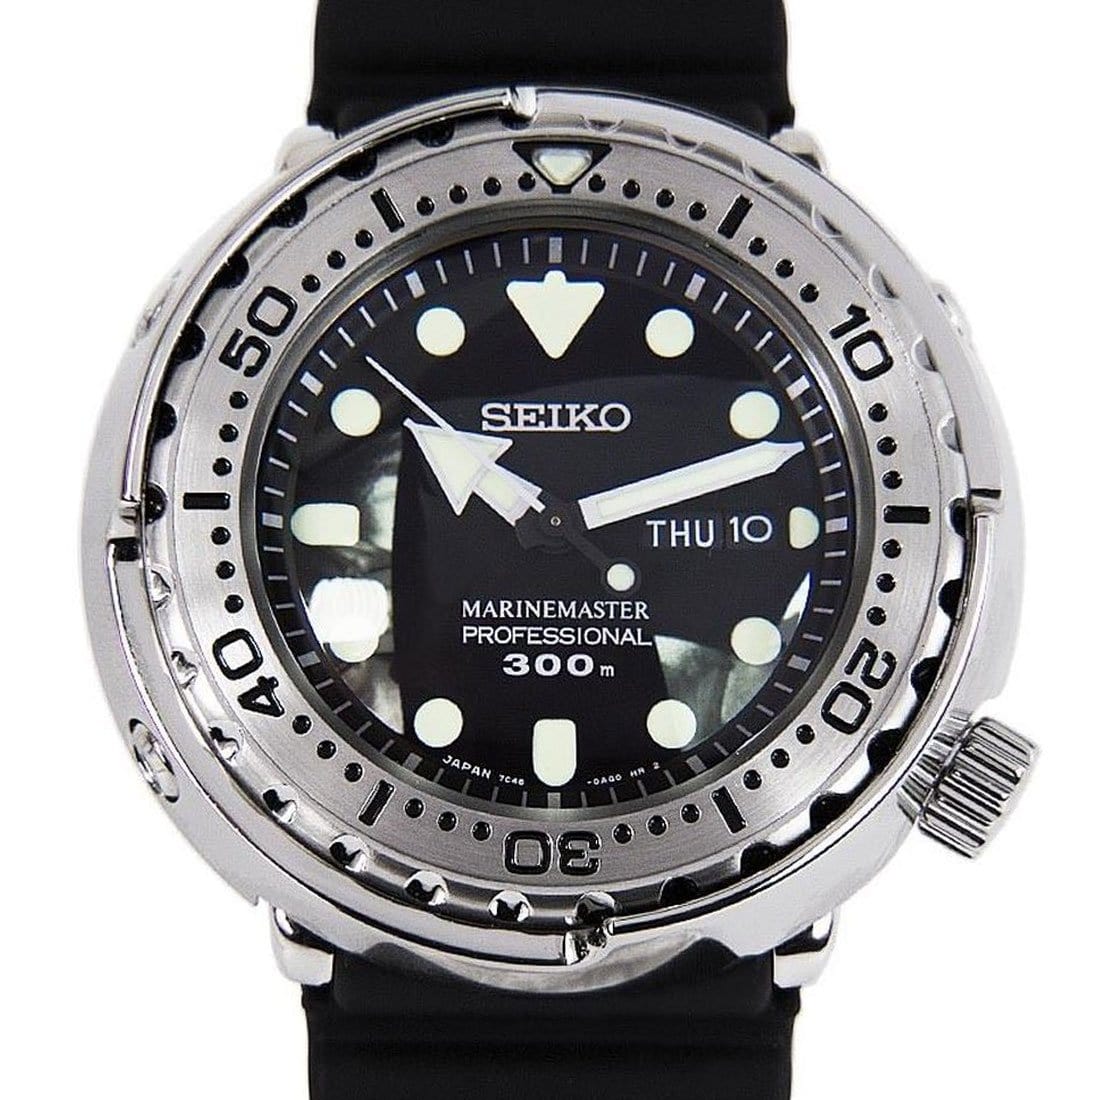 SBBN045 Seiko PROSPEX Marine Master Tuna Professional 300M JDM Watch